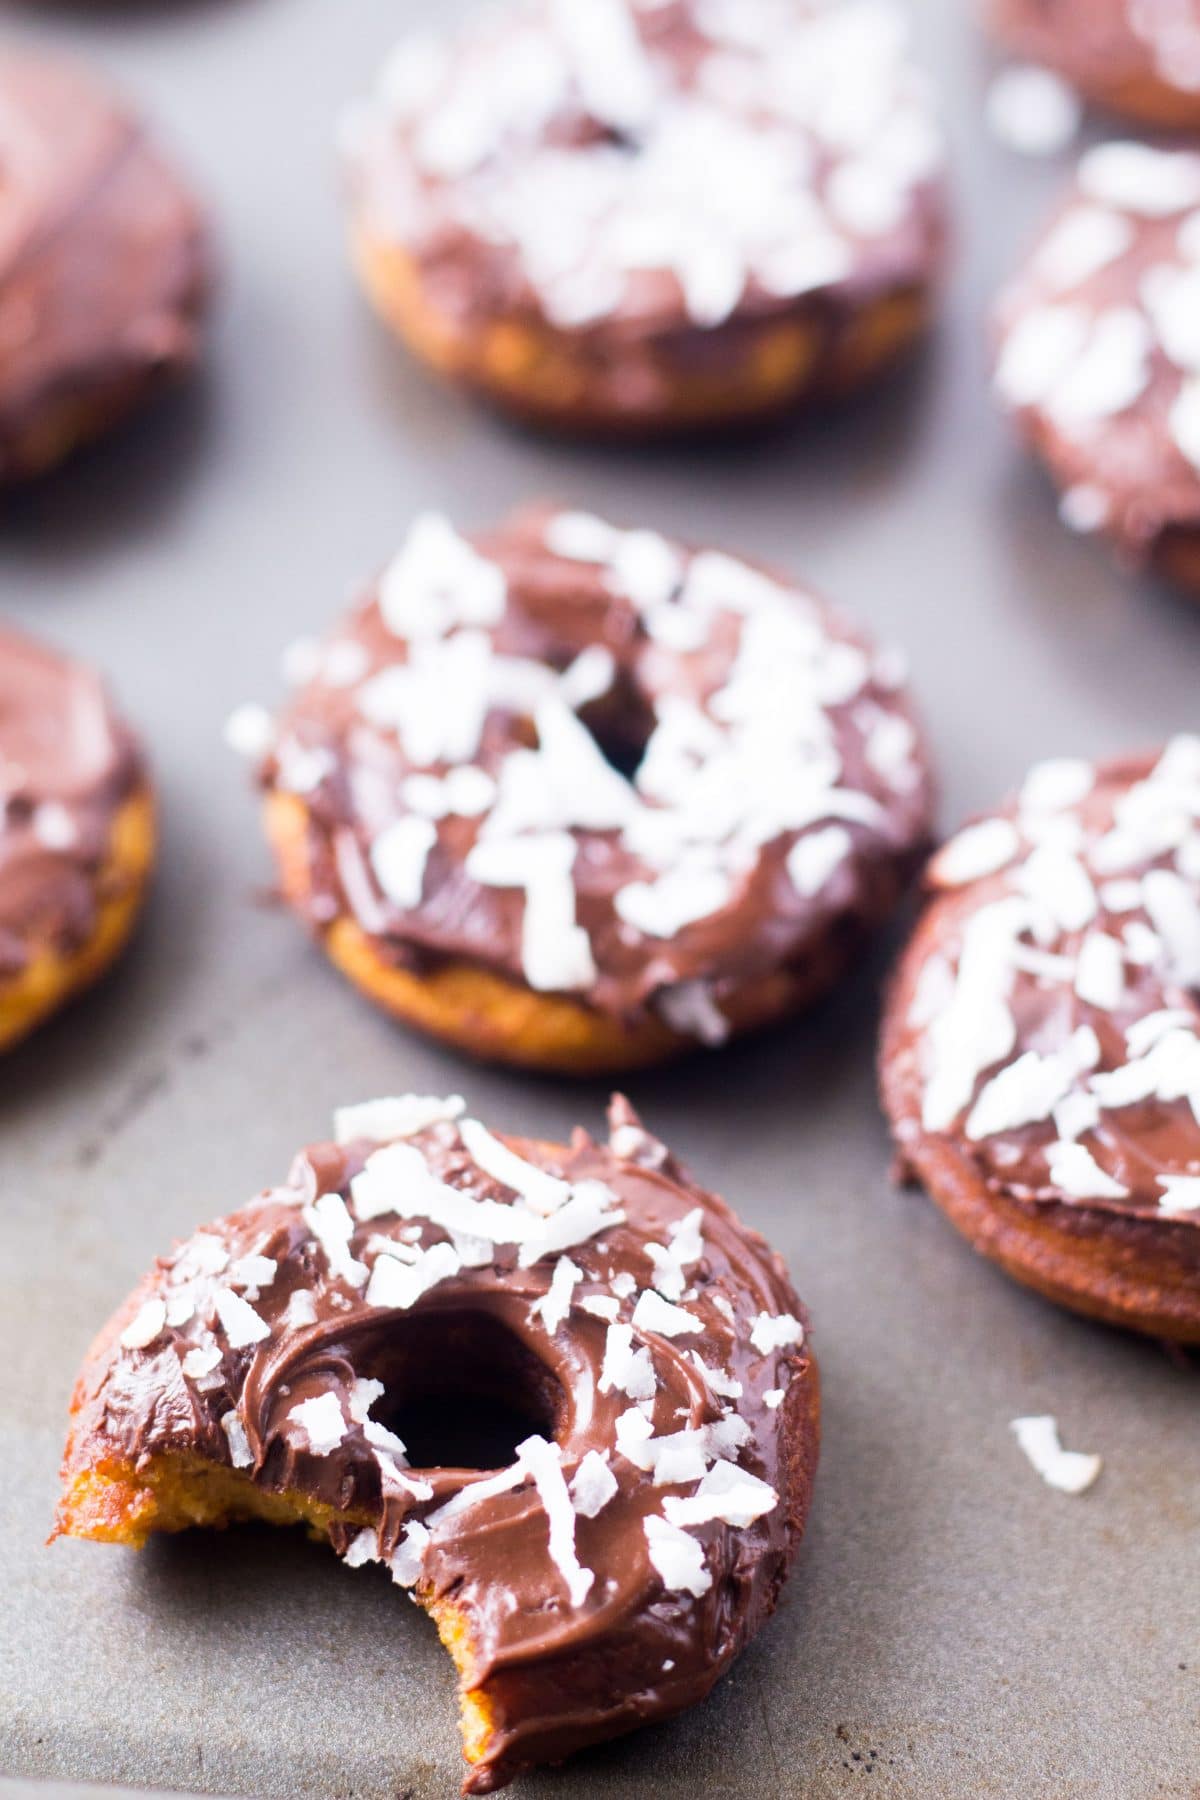 Chocolate-Glazed-Donut-image